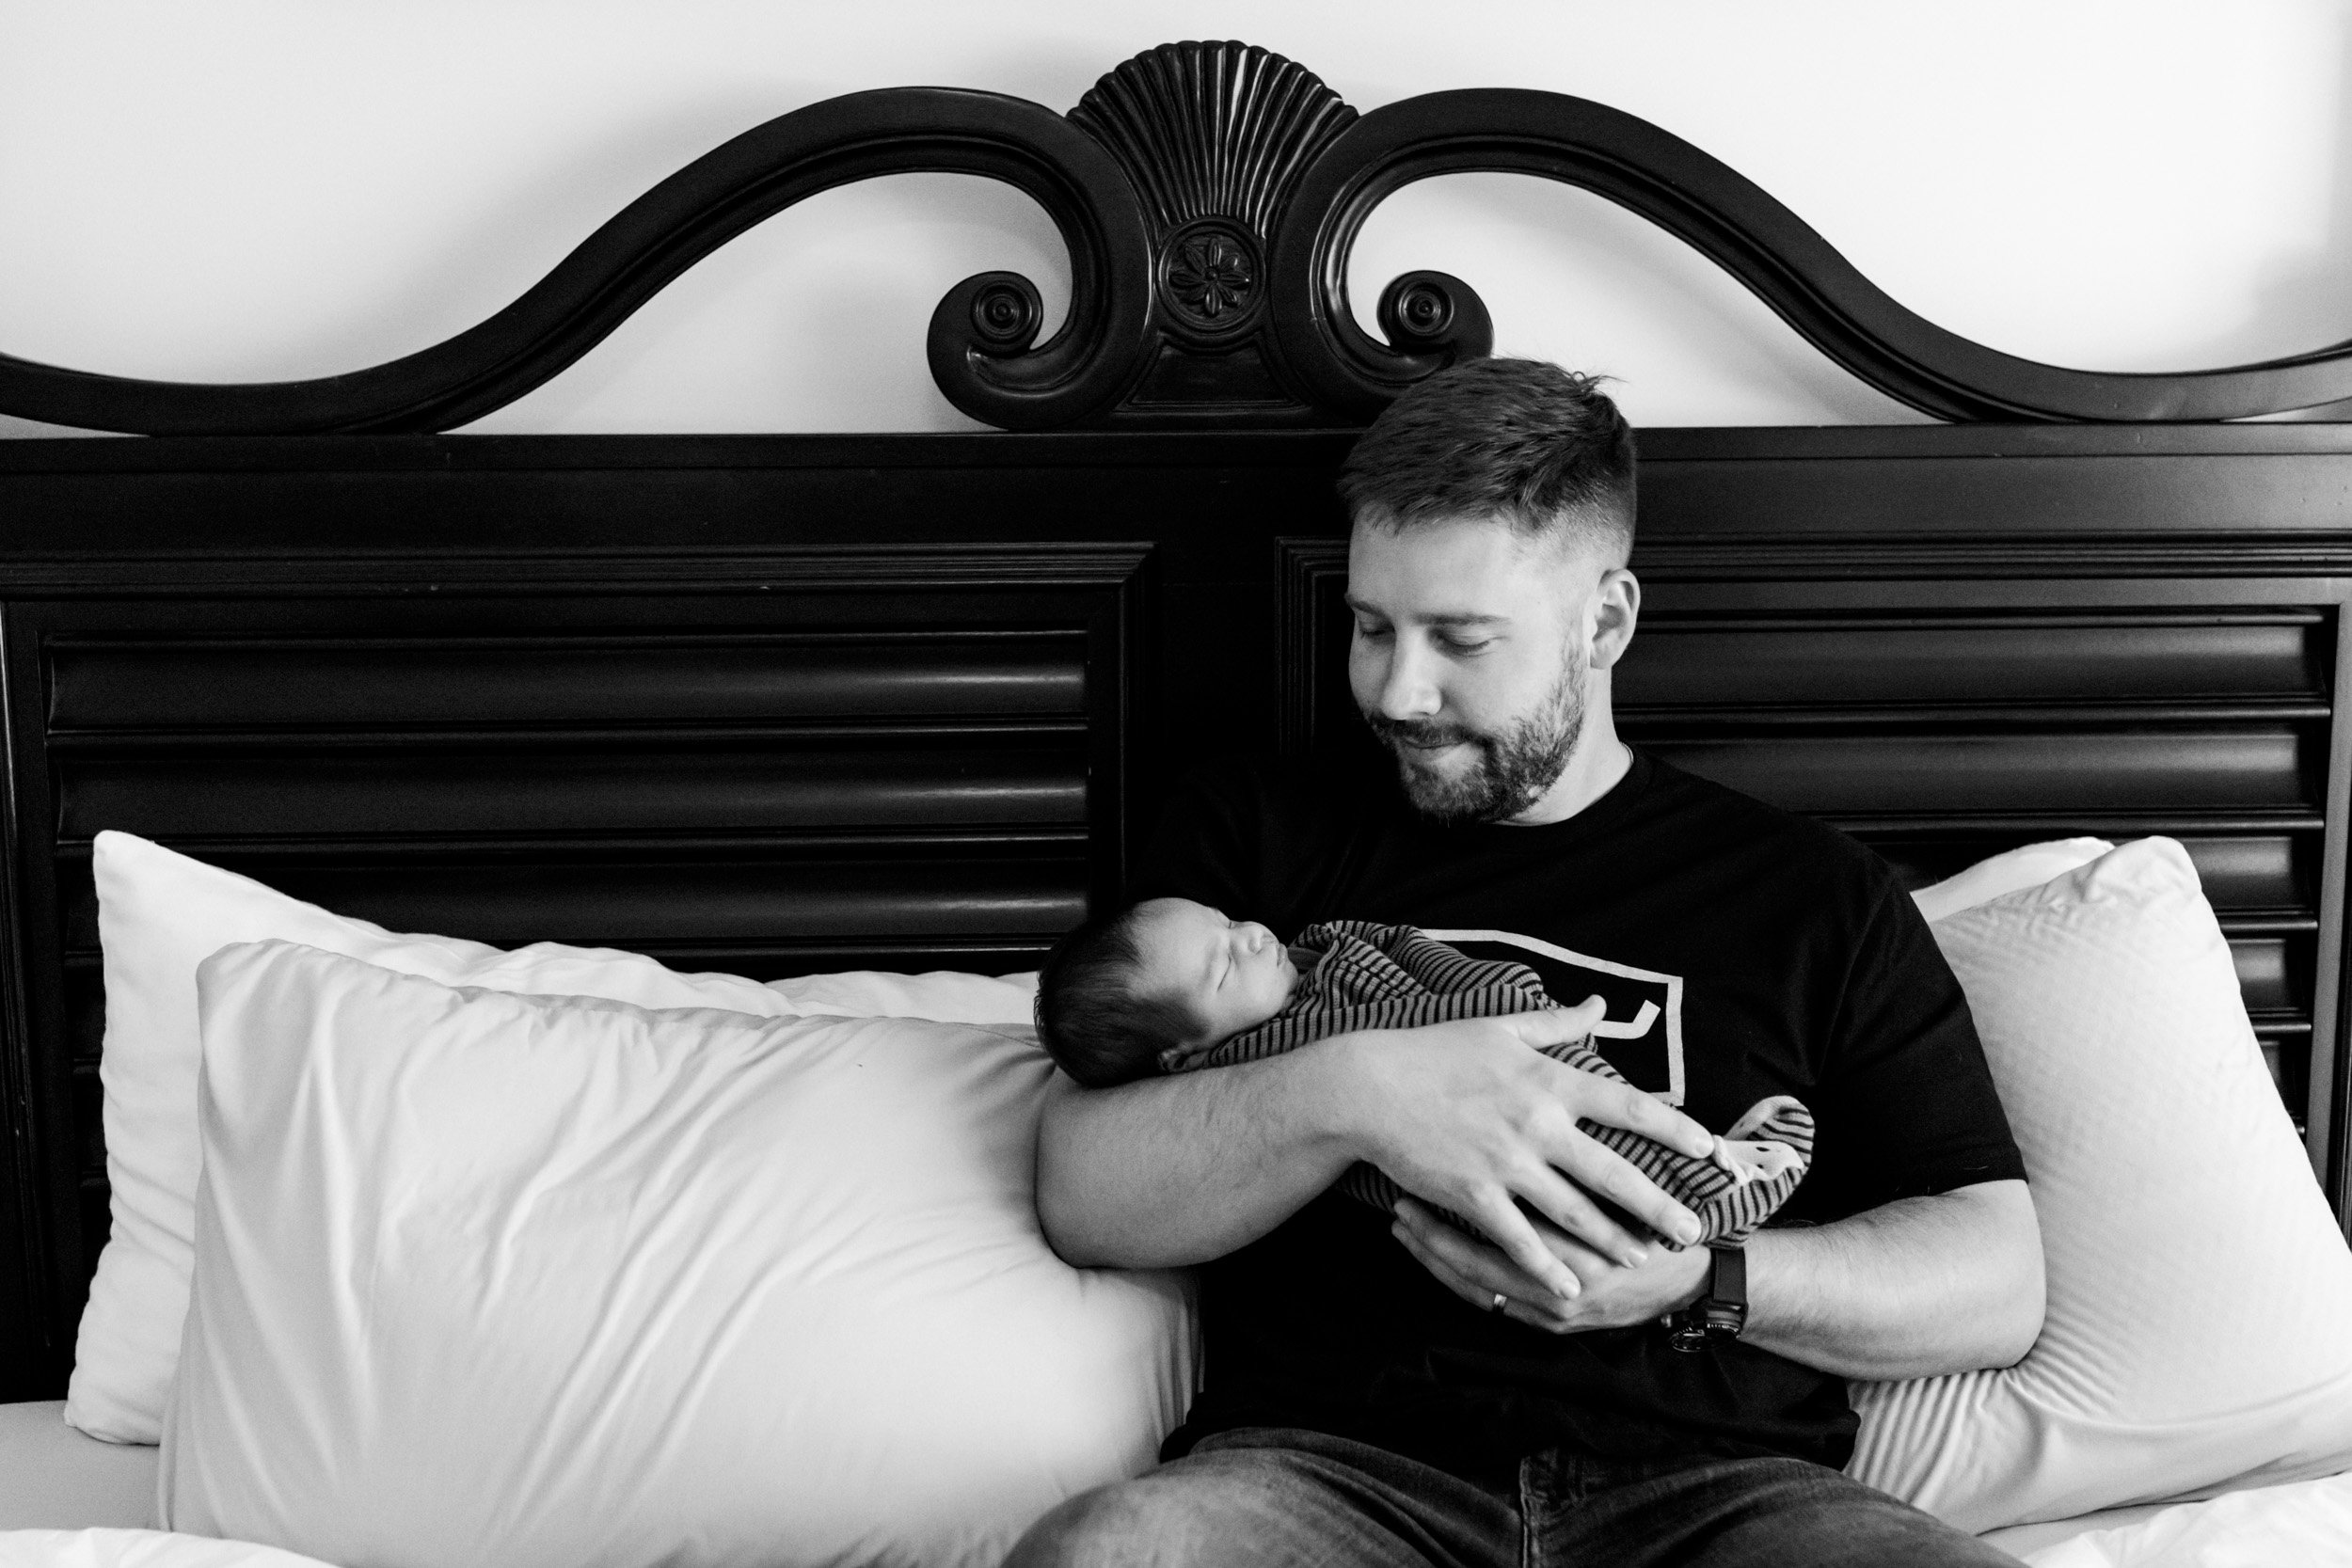 jacksonville dad holding his newborn baby boy